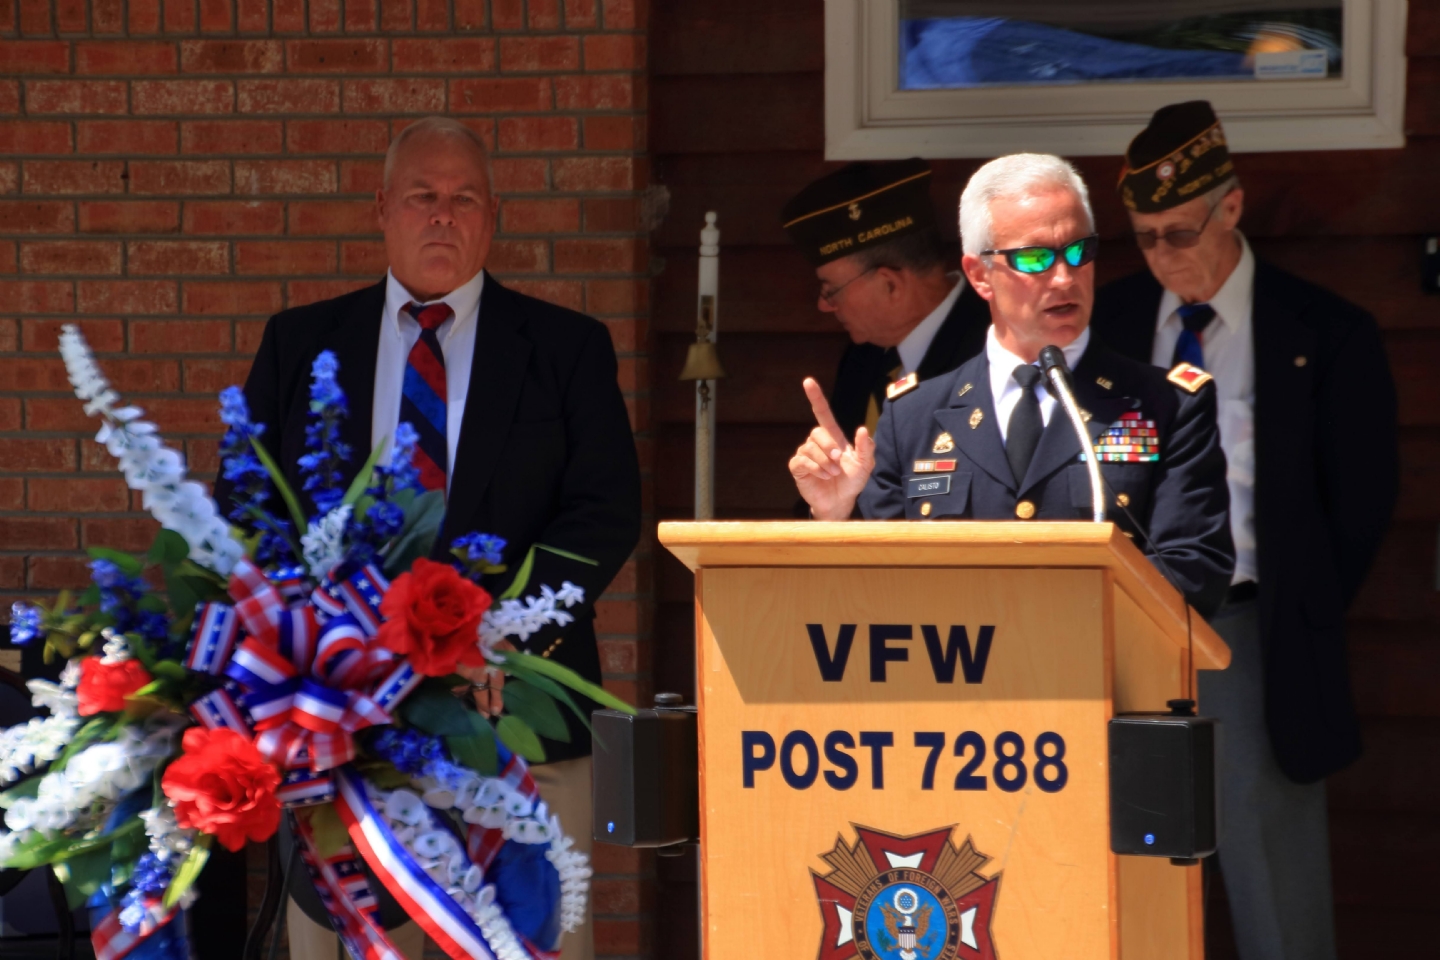 Speaker Colonel Joseph Calisto, U. S. Army (Ret.) at the Calabash VFW Post 7288 Memorial Day Service.